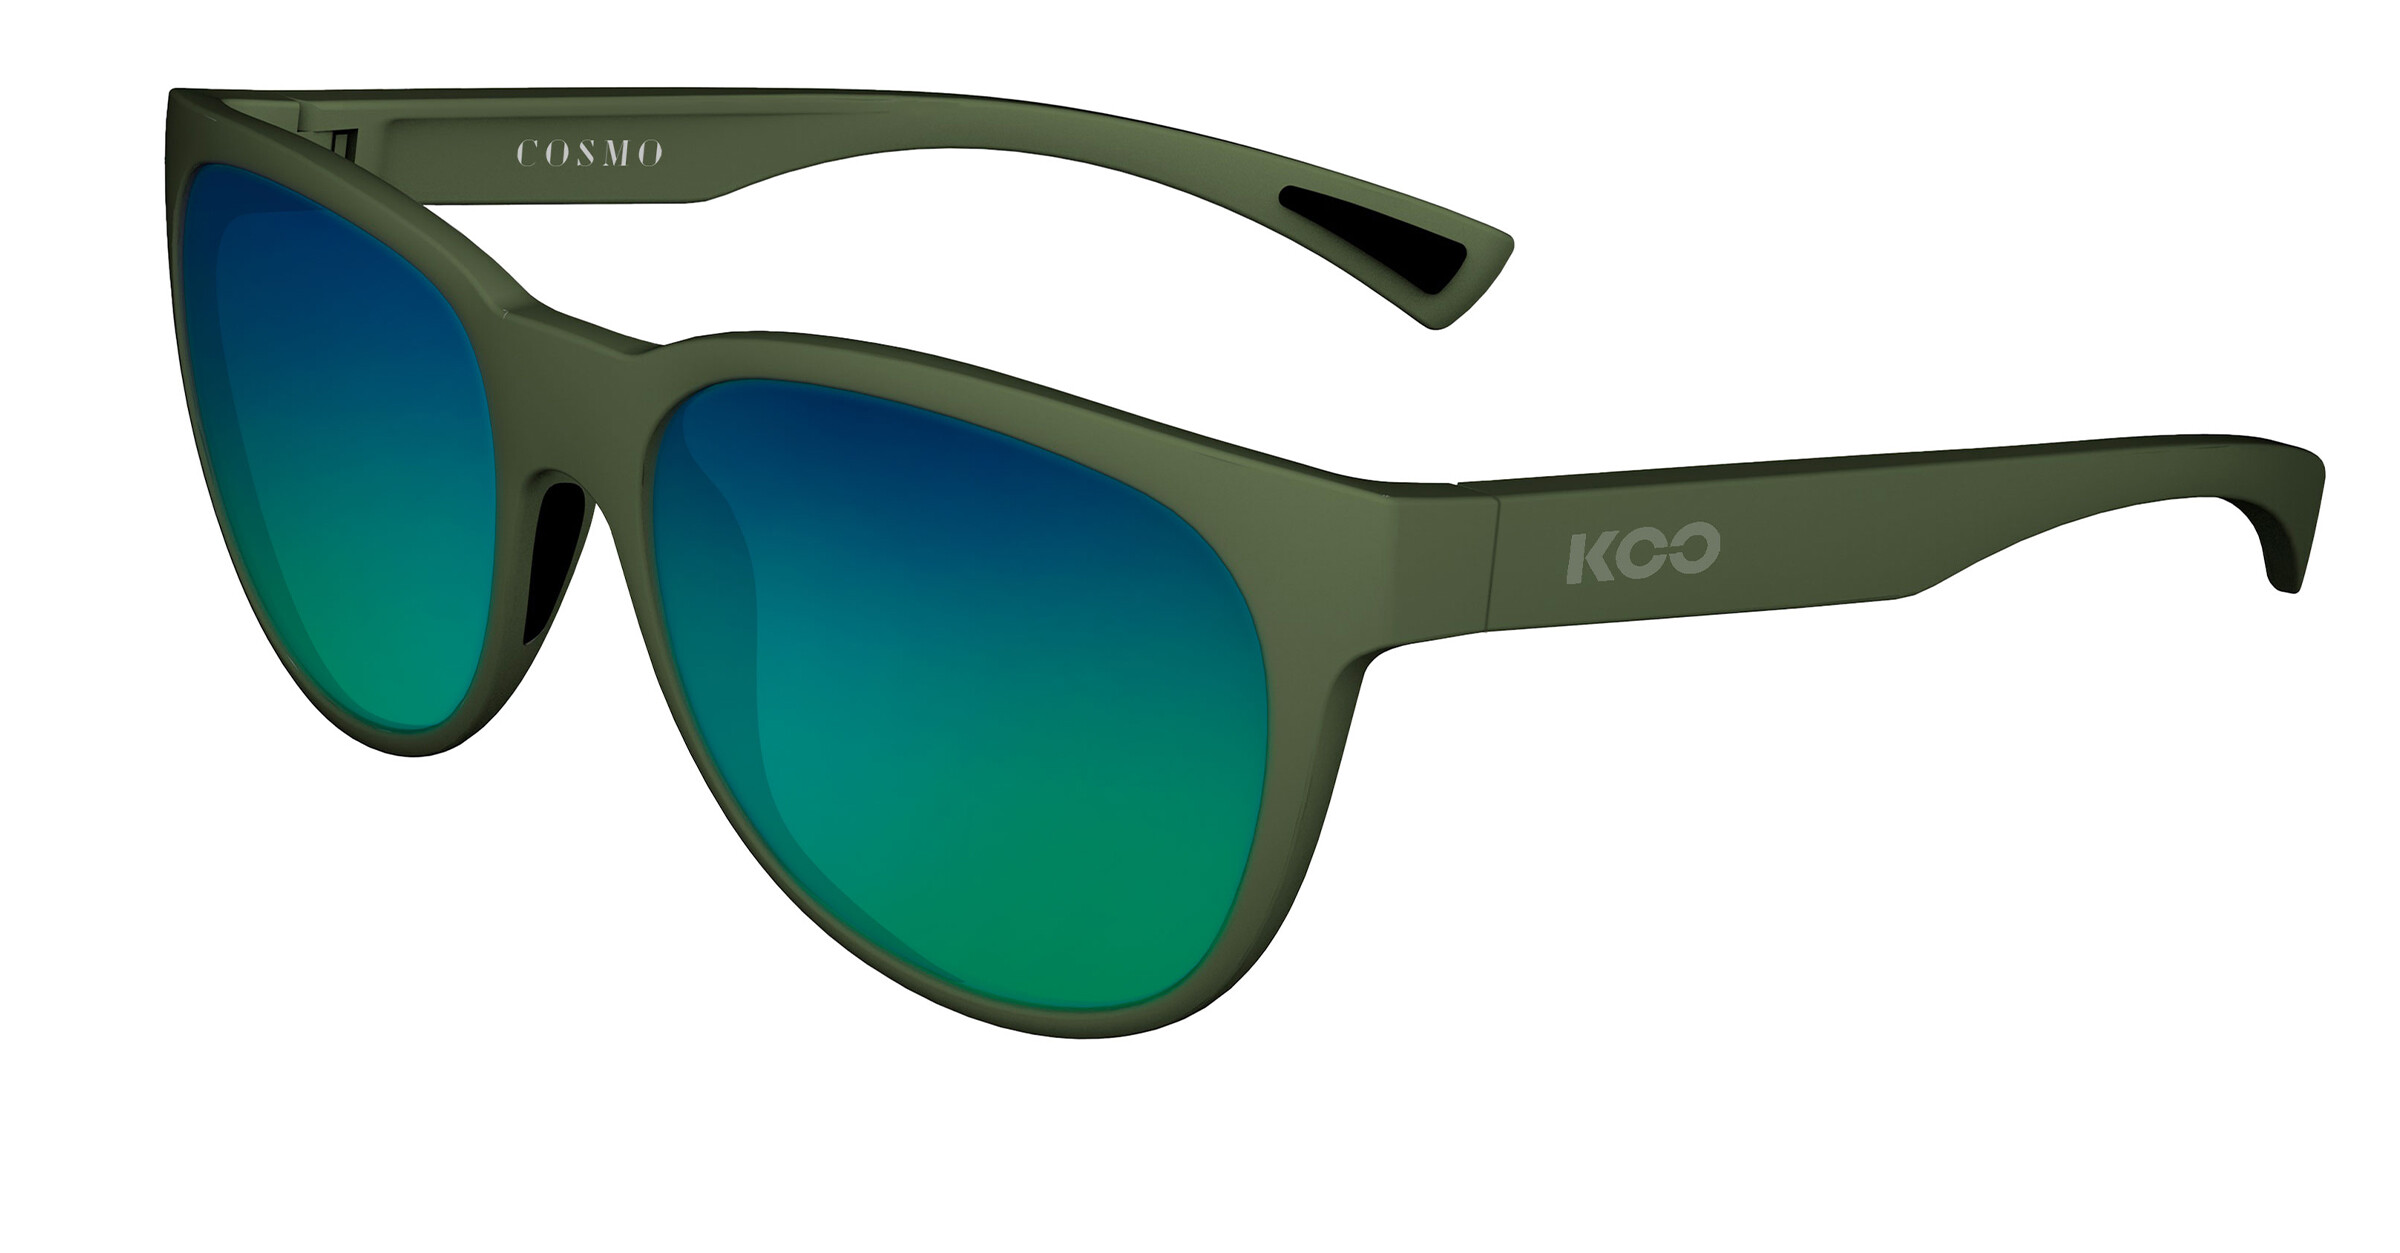 Sunglasses | KOO – UK